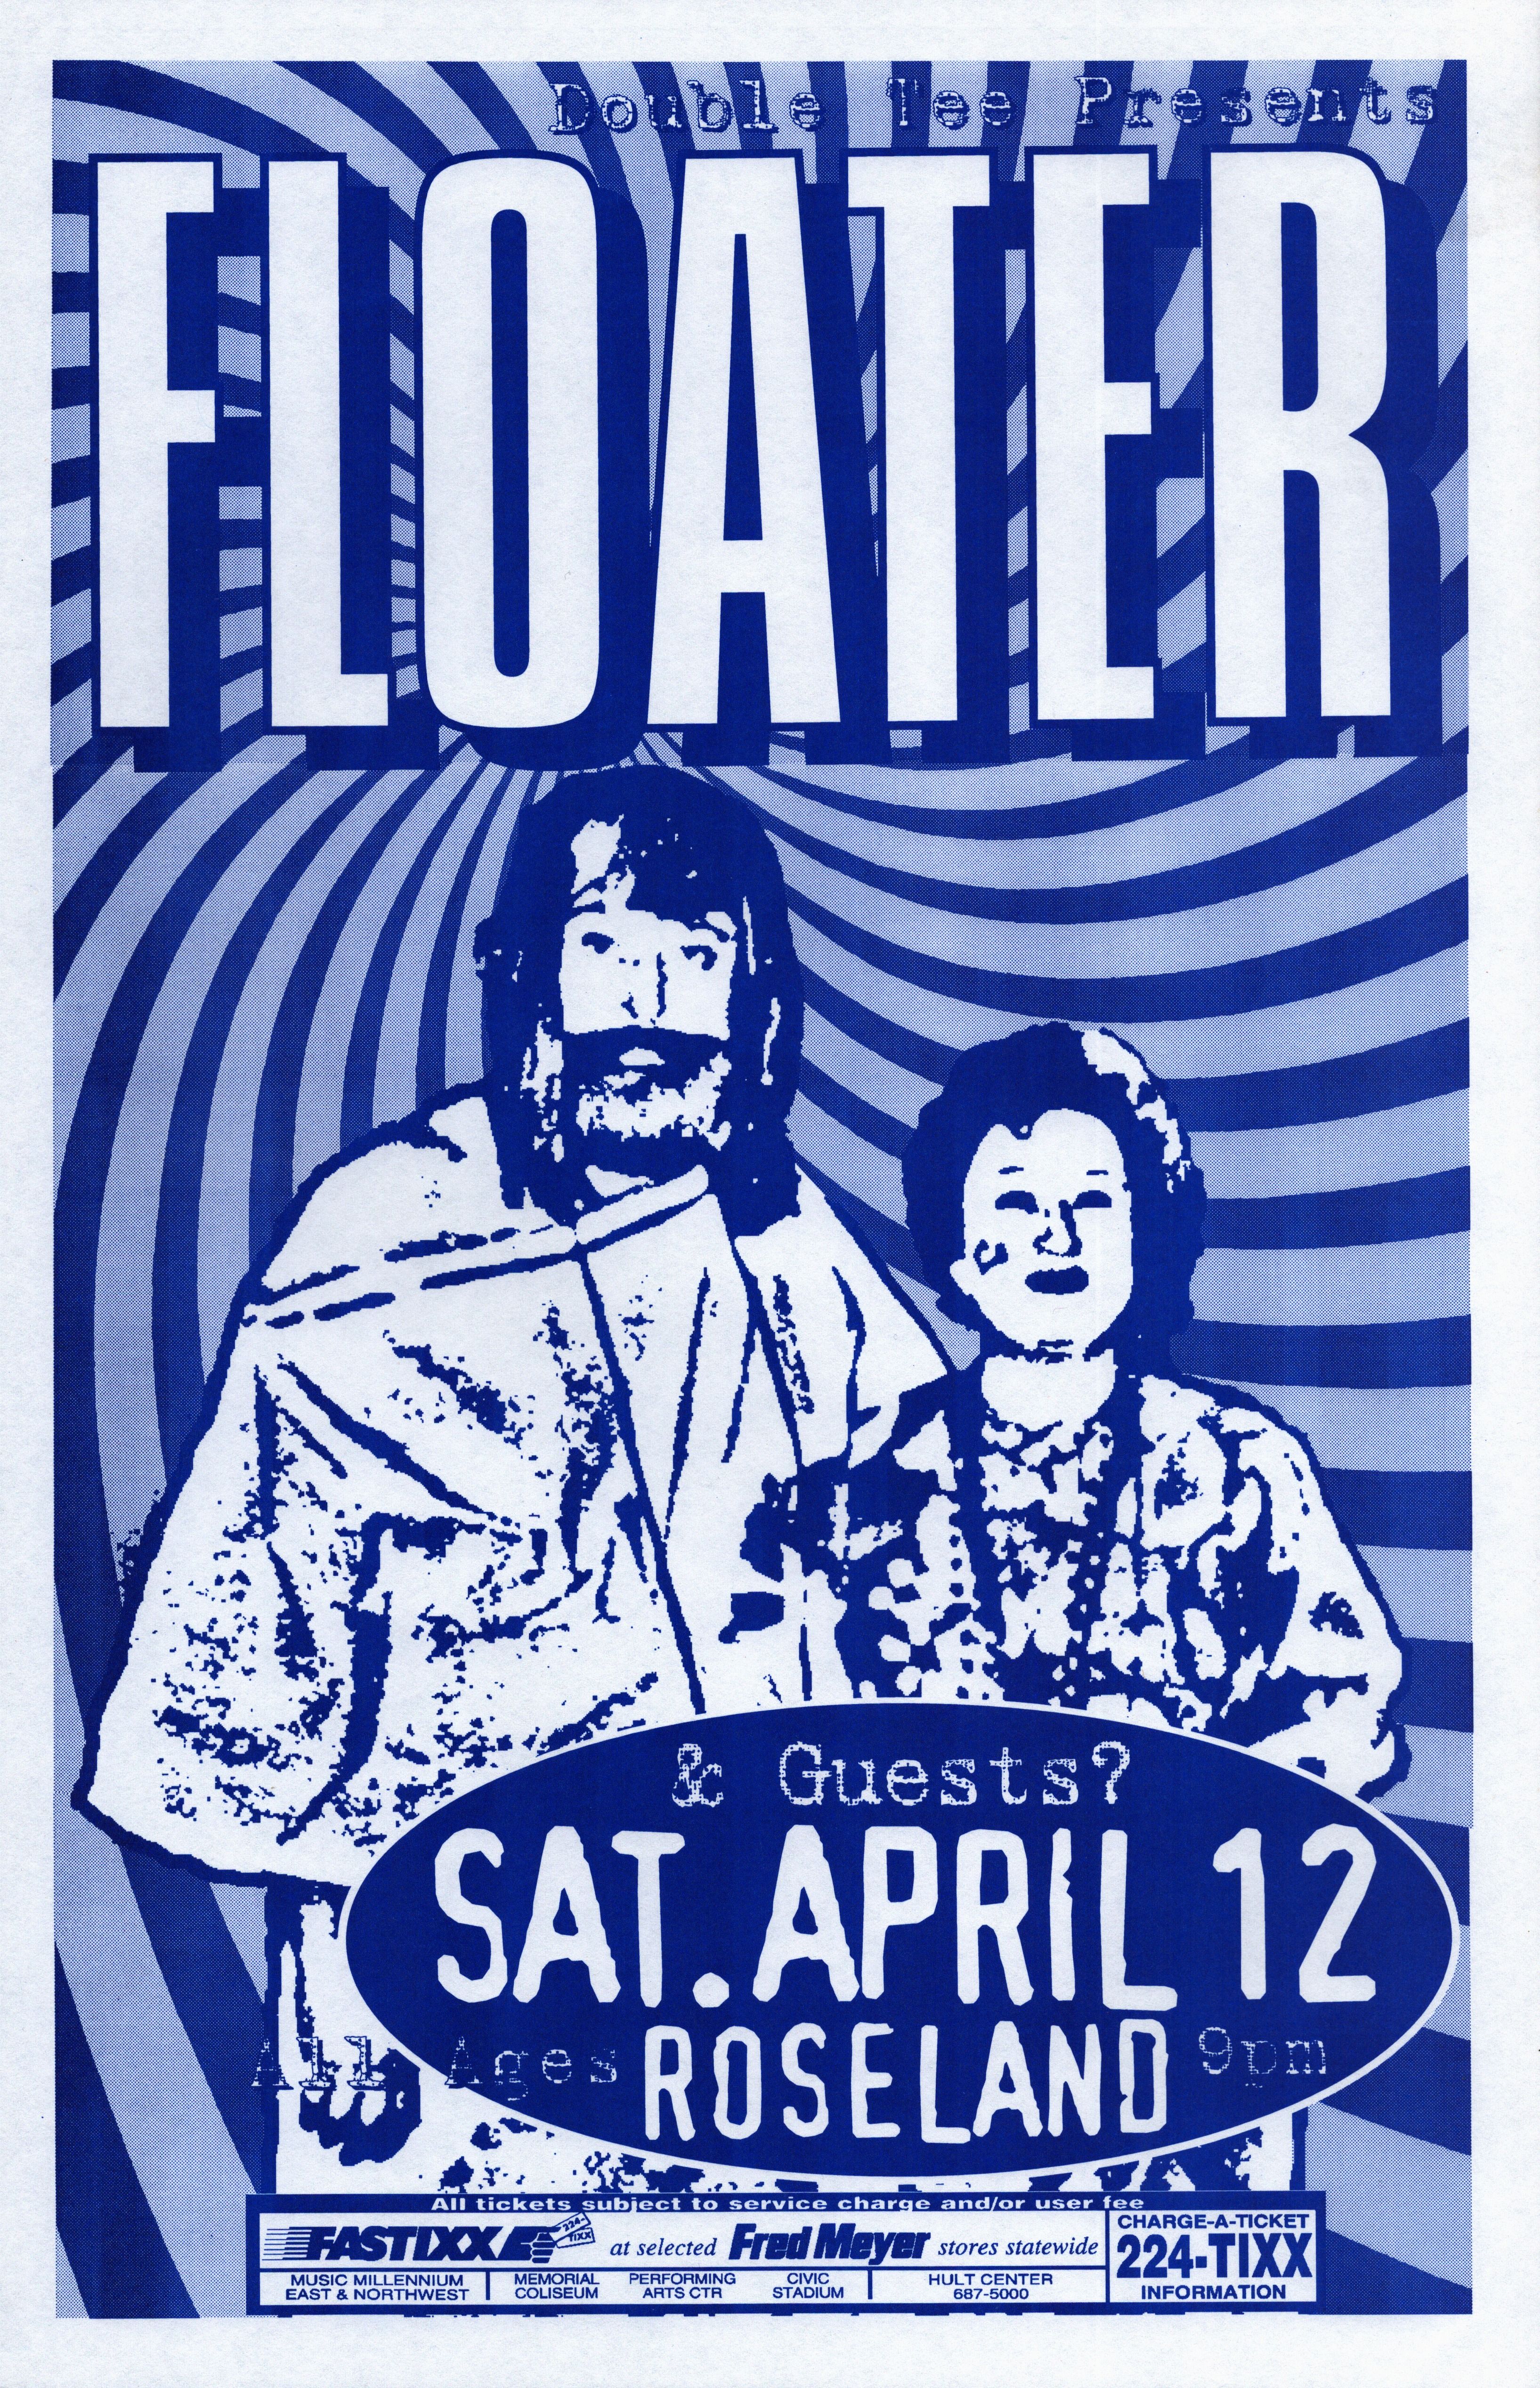 MXP-193.3 Floater Roseland Theater 1999 Concert Poster